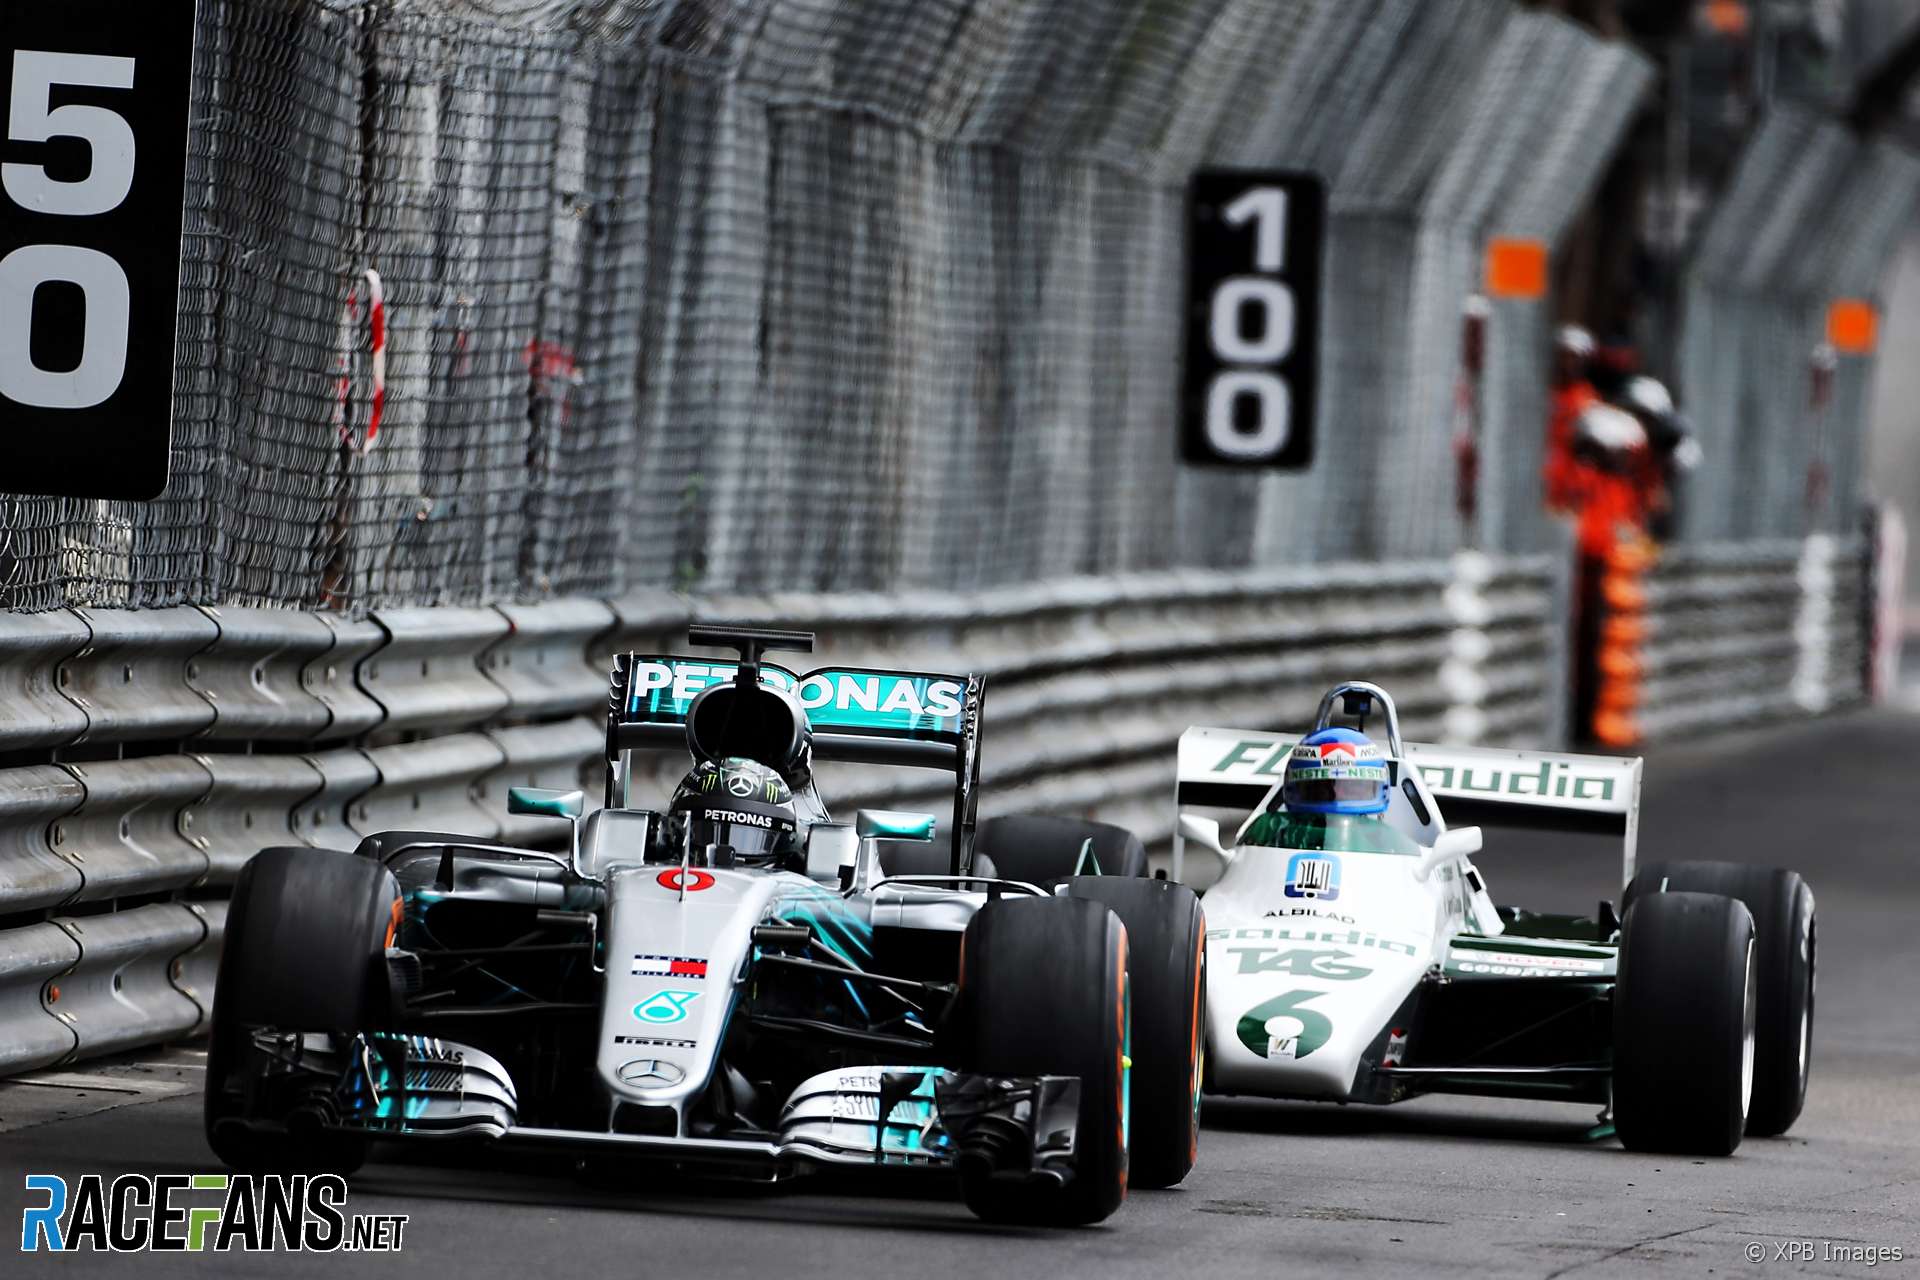 Nico Rosberg, Keke Rosberg, Monaco, 2018